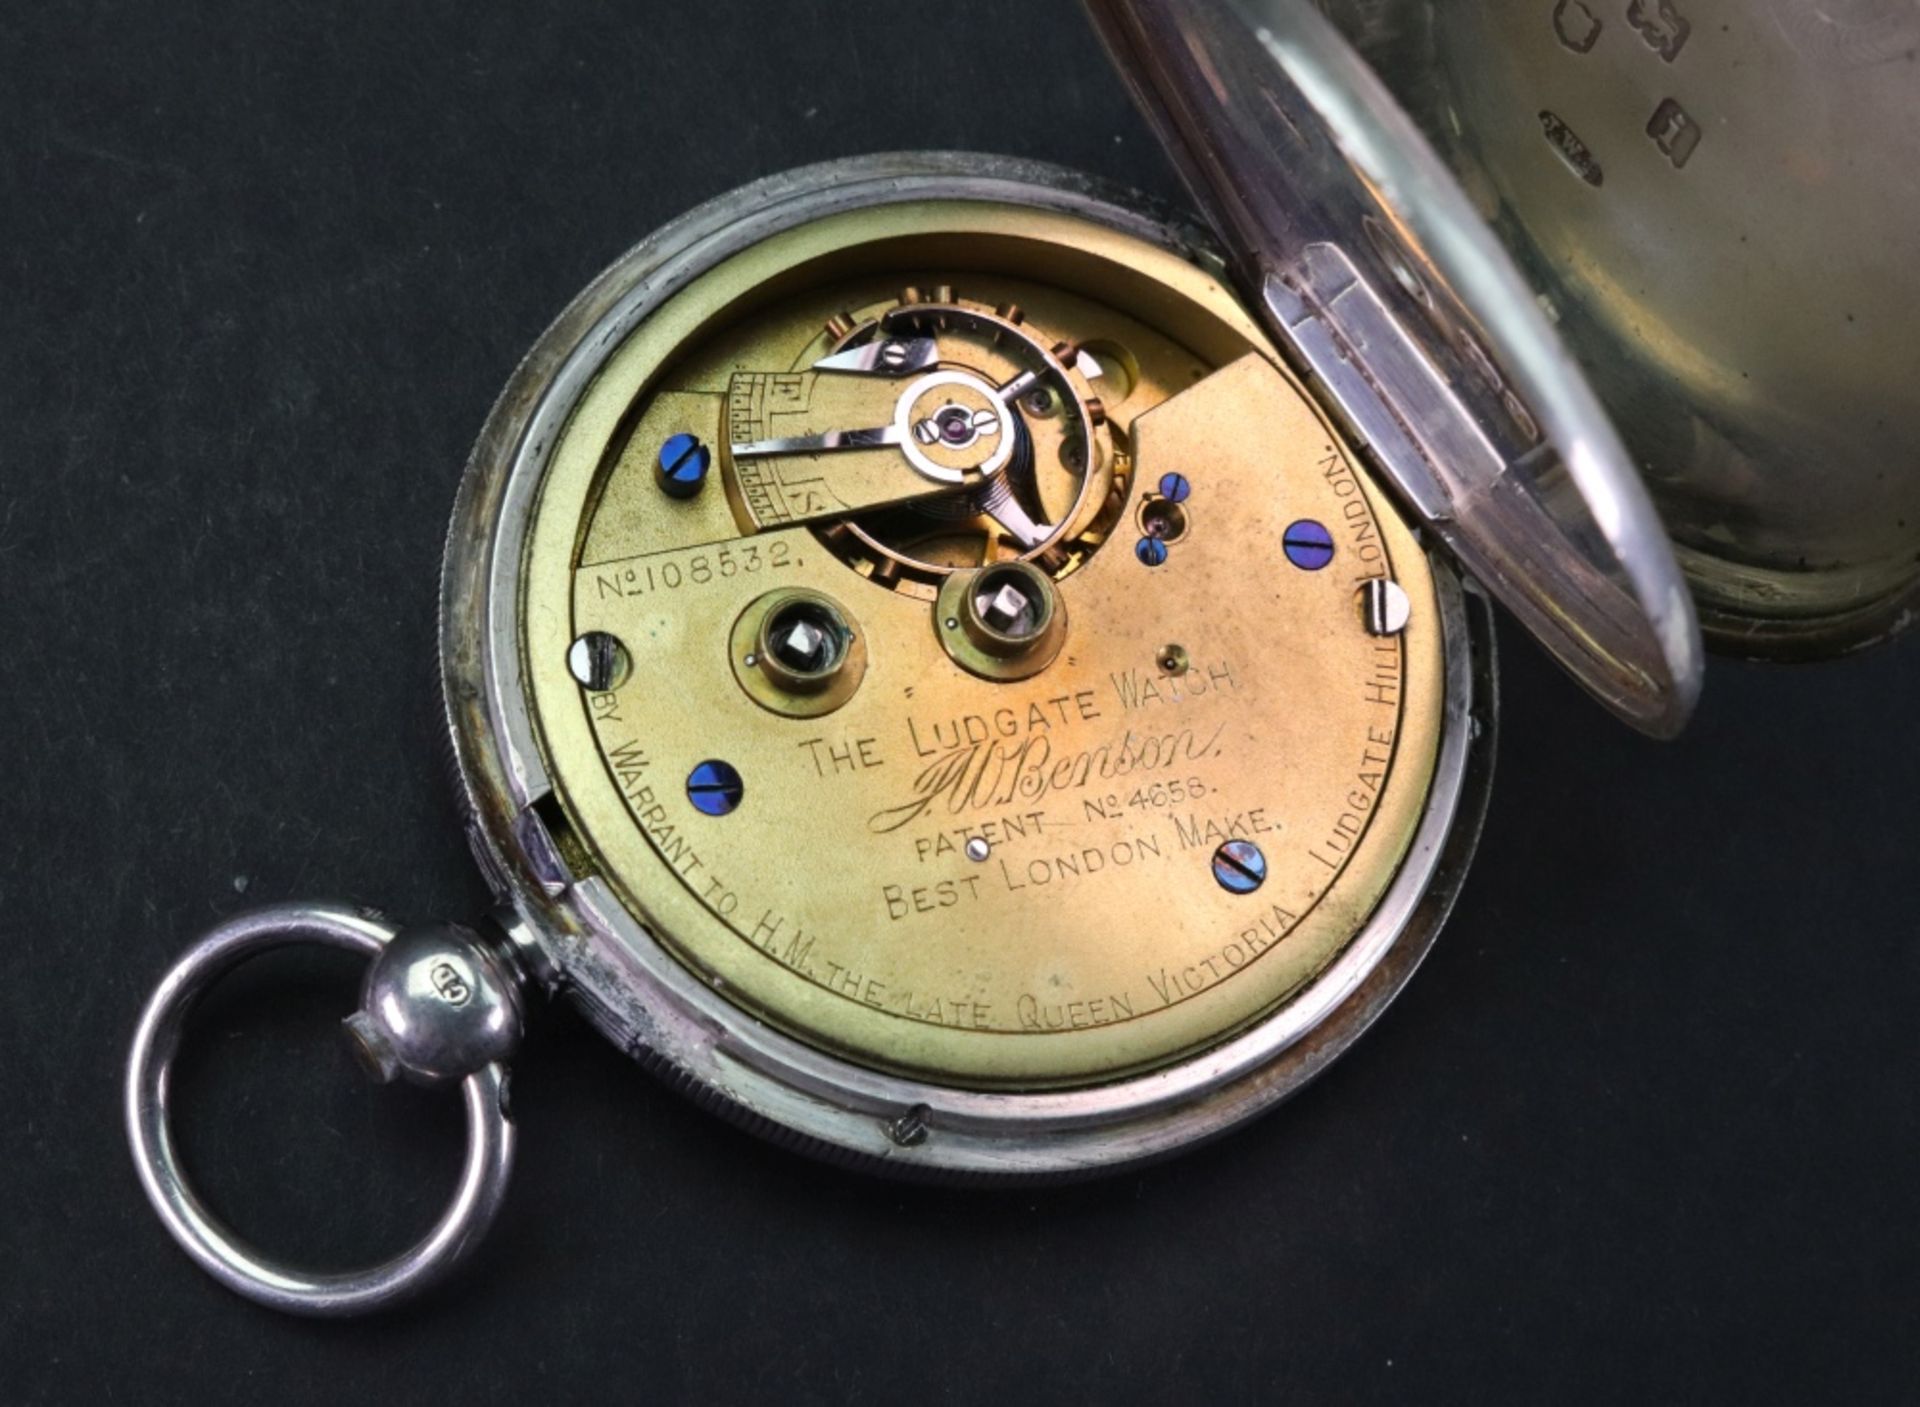 J W Benson; a gentleman's silver cased pocket watch, - Image 2 of 4